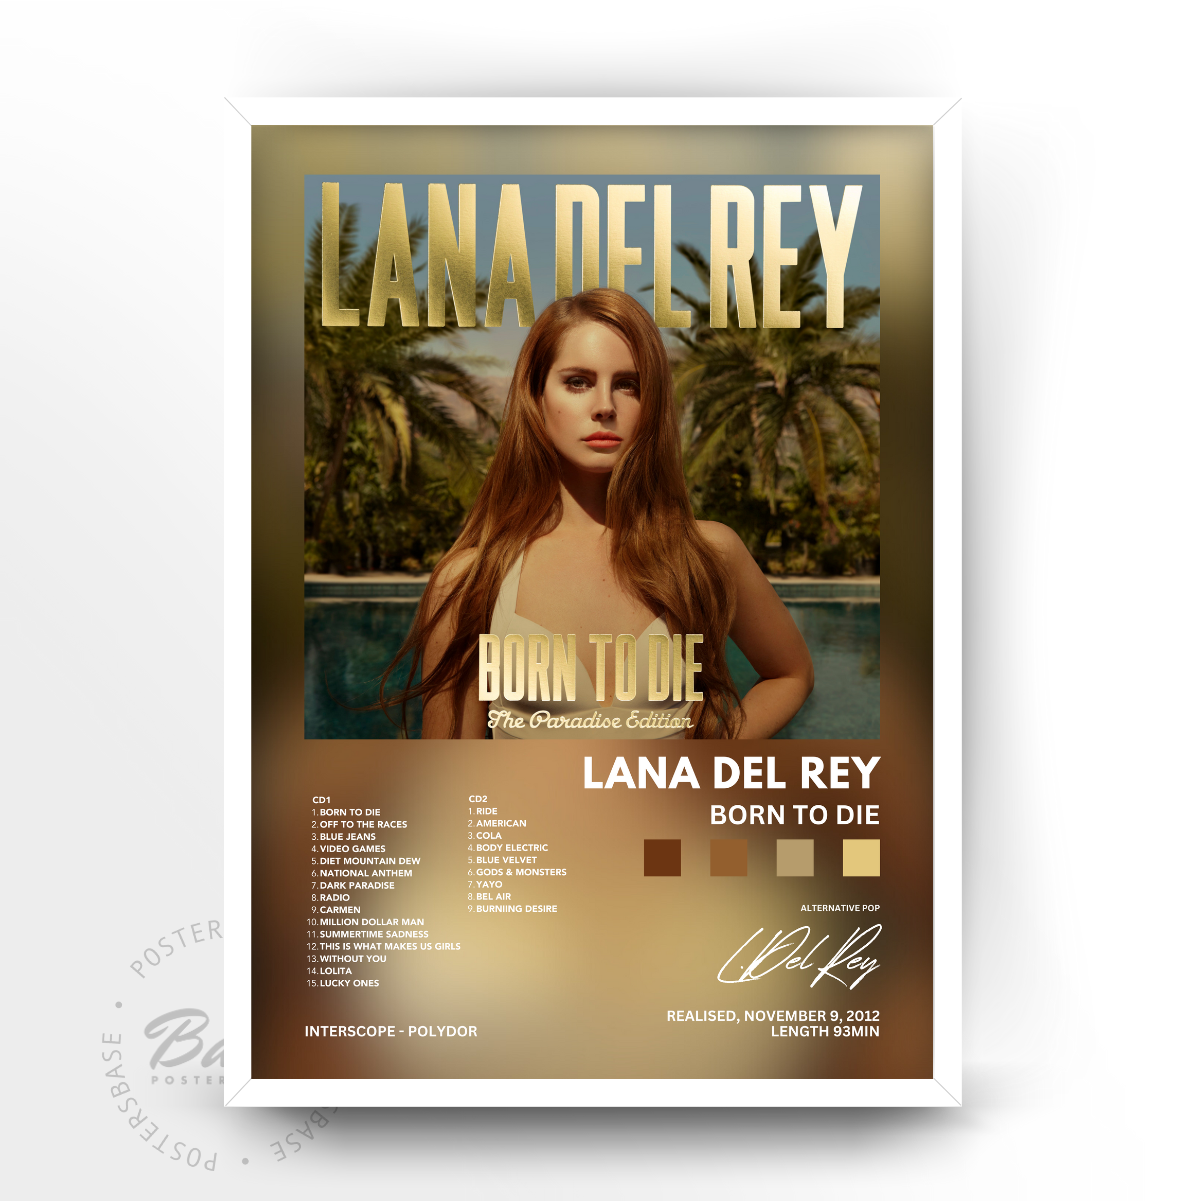 Álbum Lana Del Rey 